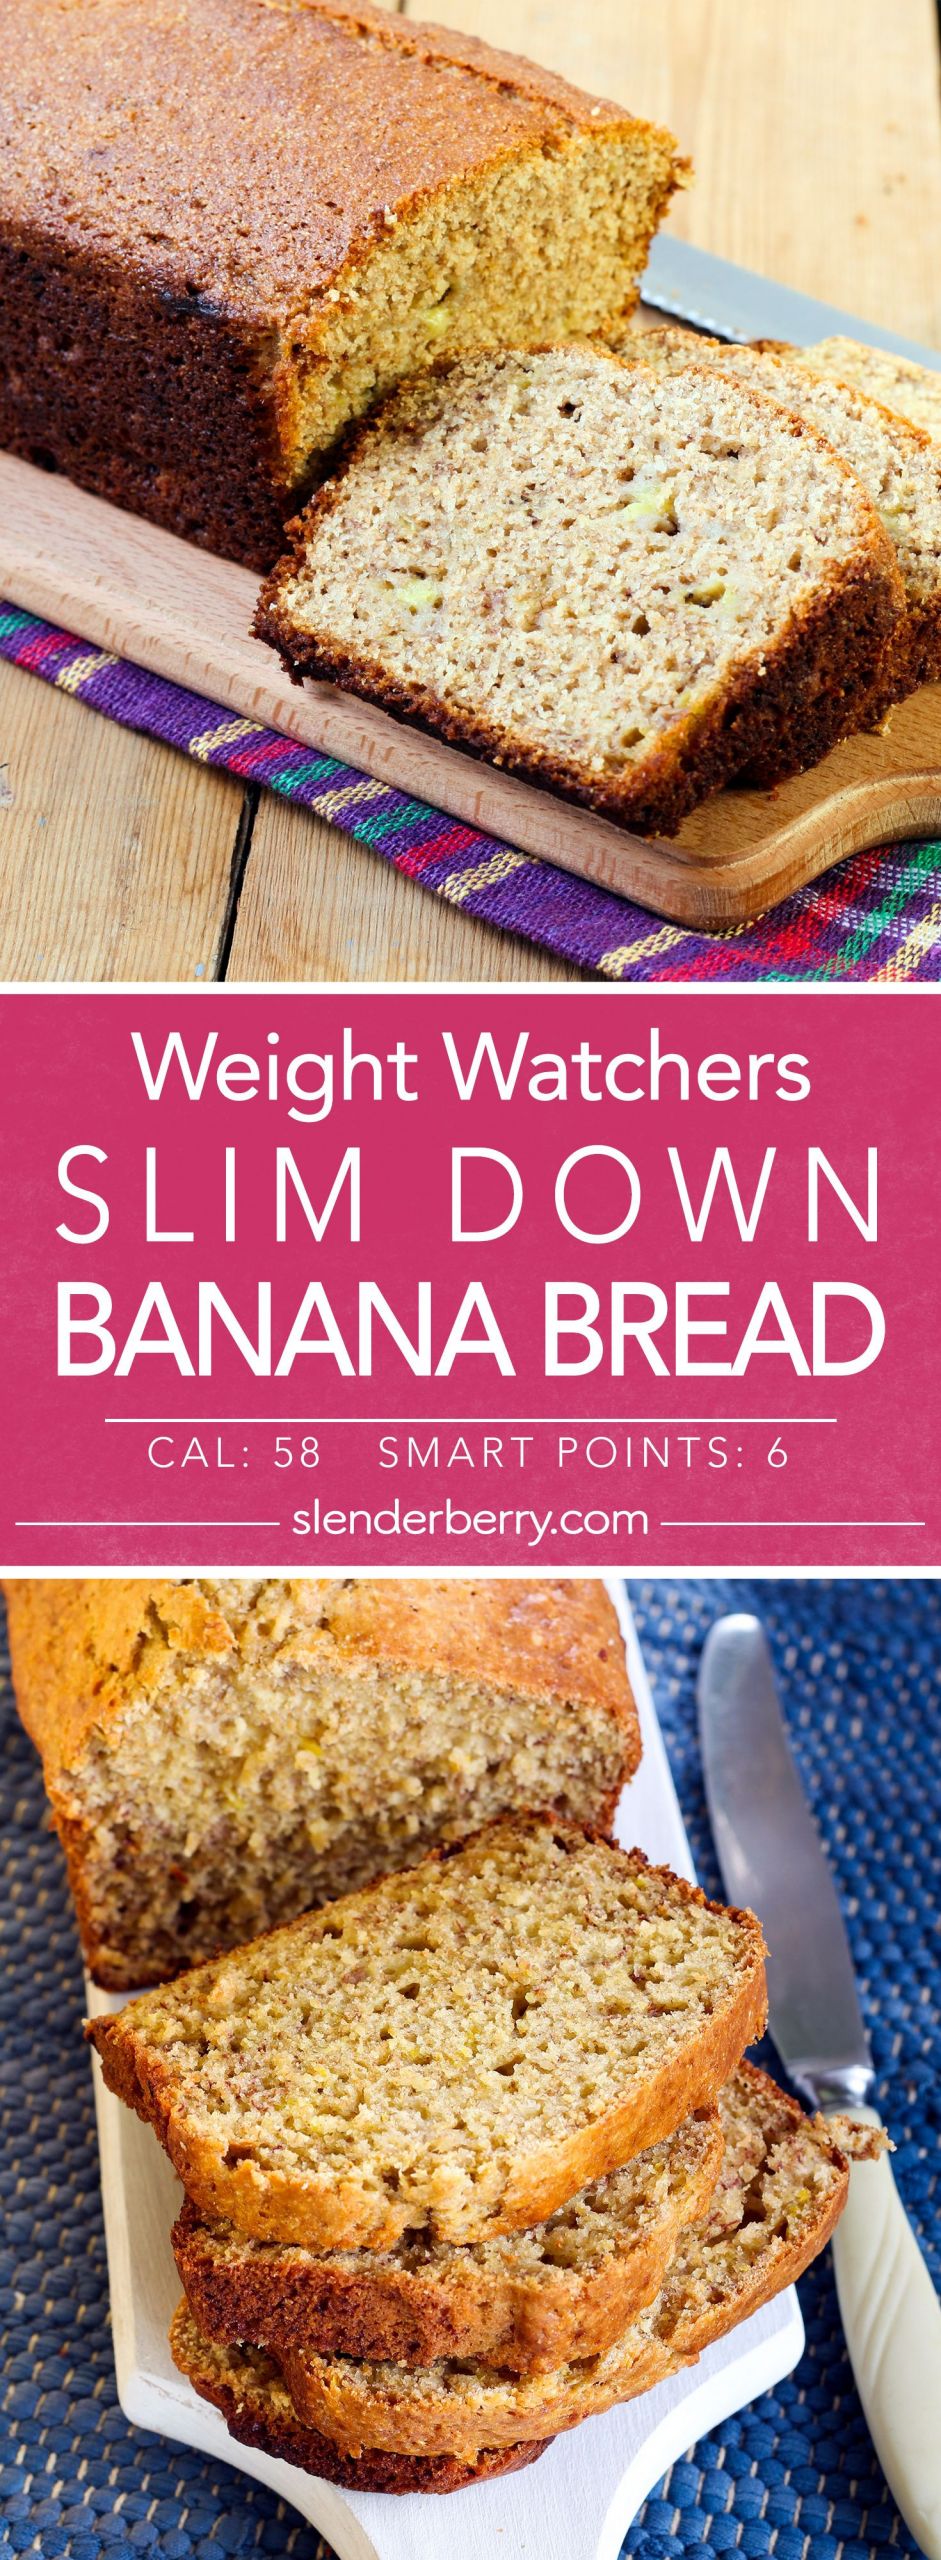 Weight Watchers Banana Bread Recipe
 Slim Down Banana Bread Recipe